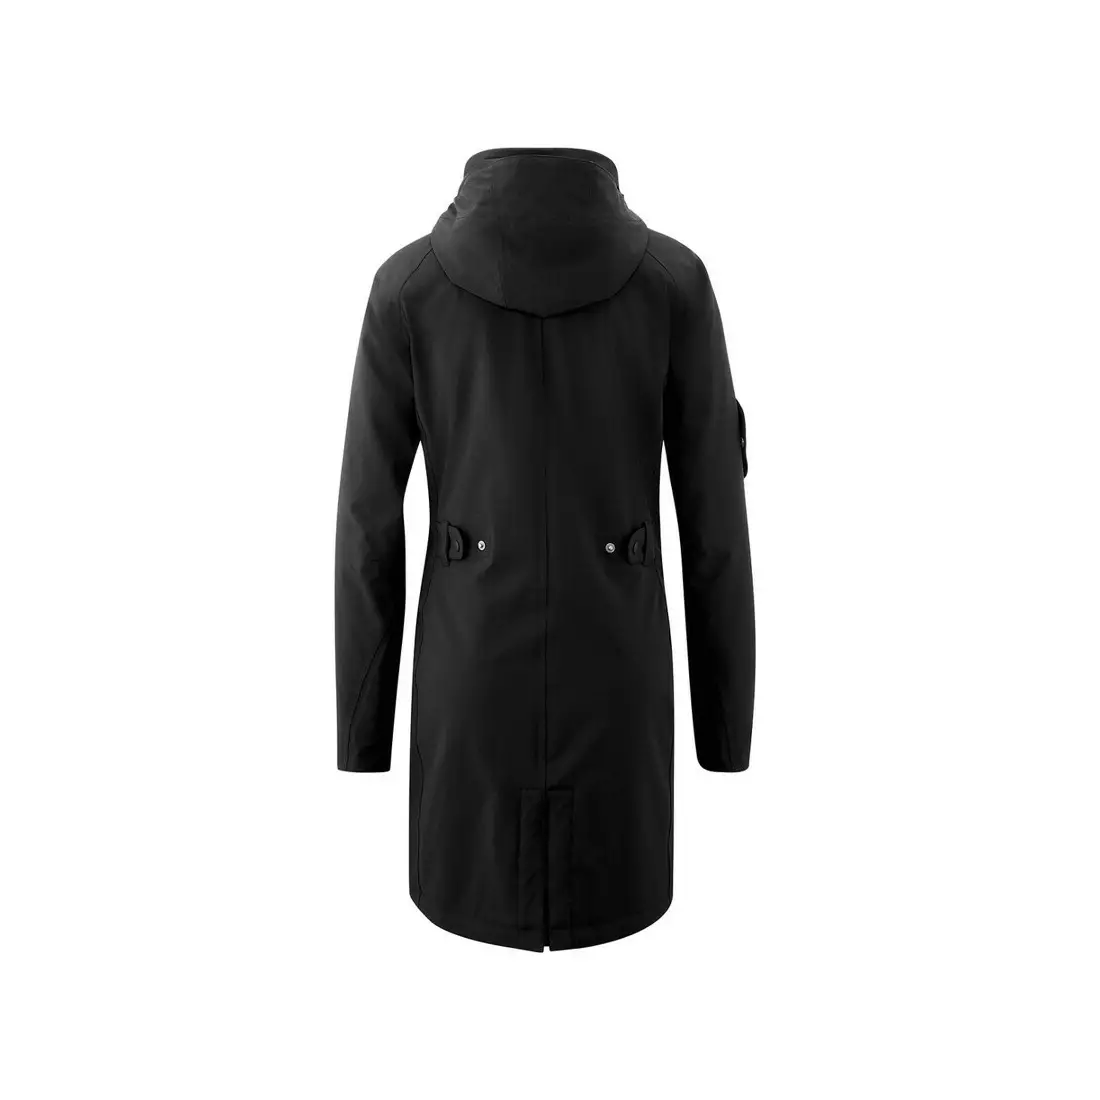 MAIER women's outdoor jacket RIAD 2.0 W black 225743/900.38